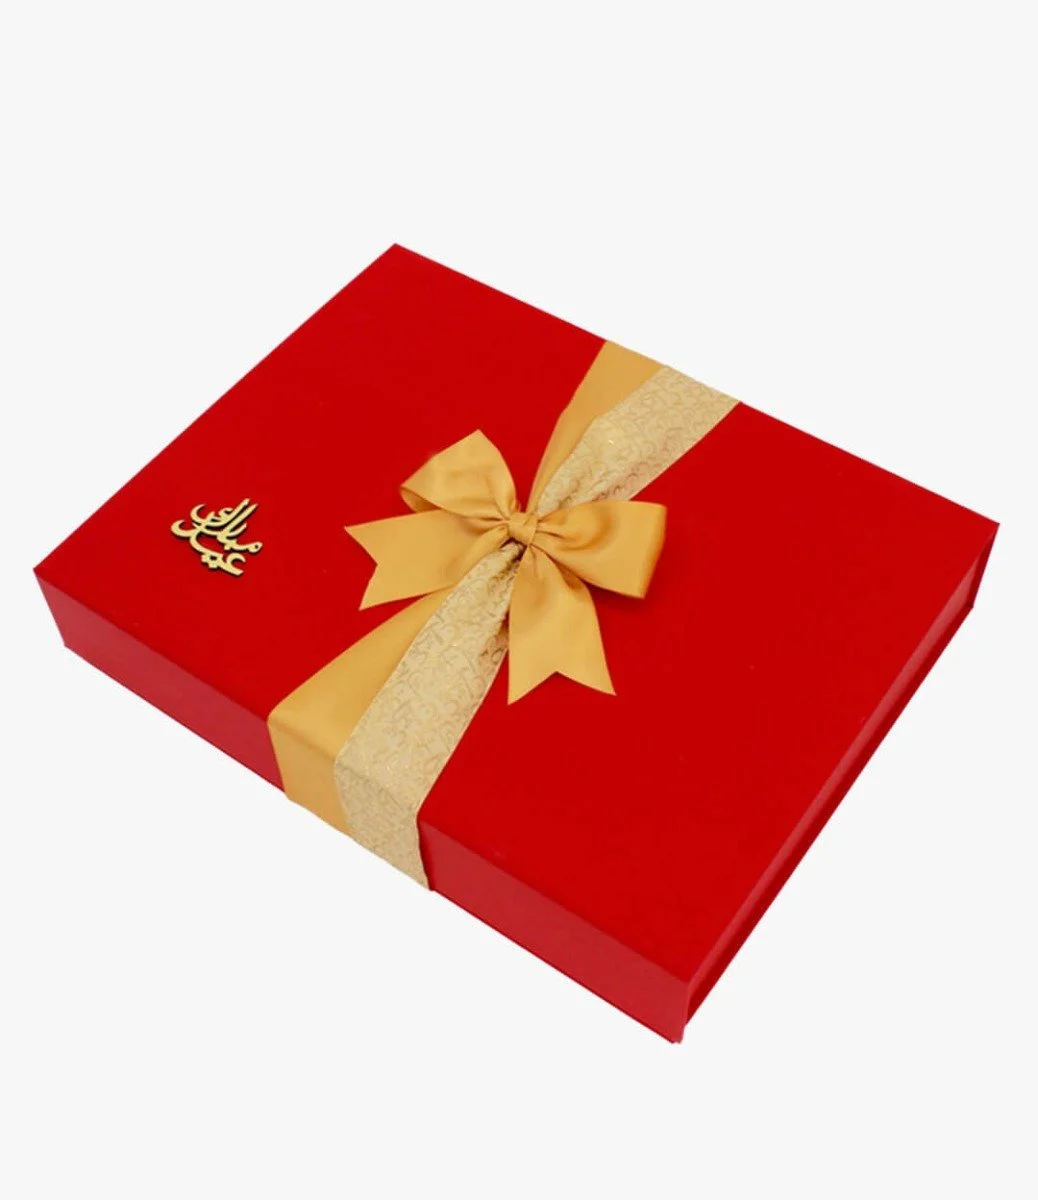 Eid Luxury Chocolate Dates Box 280g by Le Chocolatier Dubai